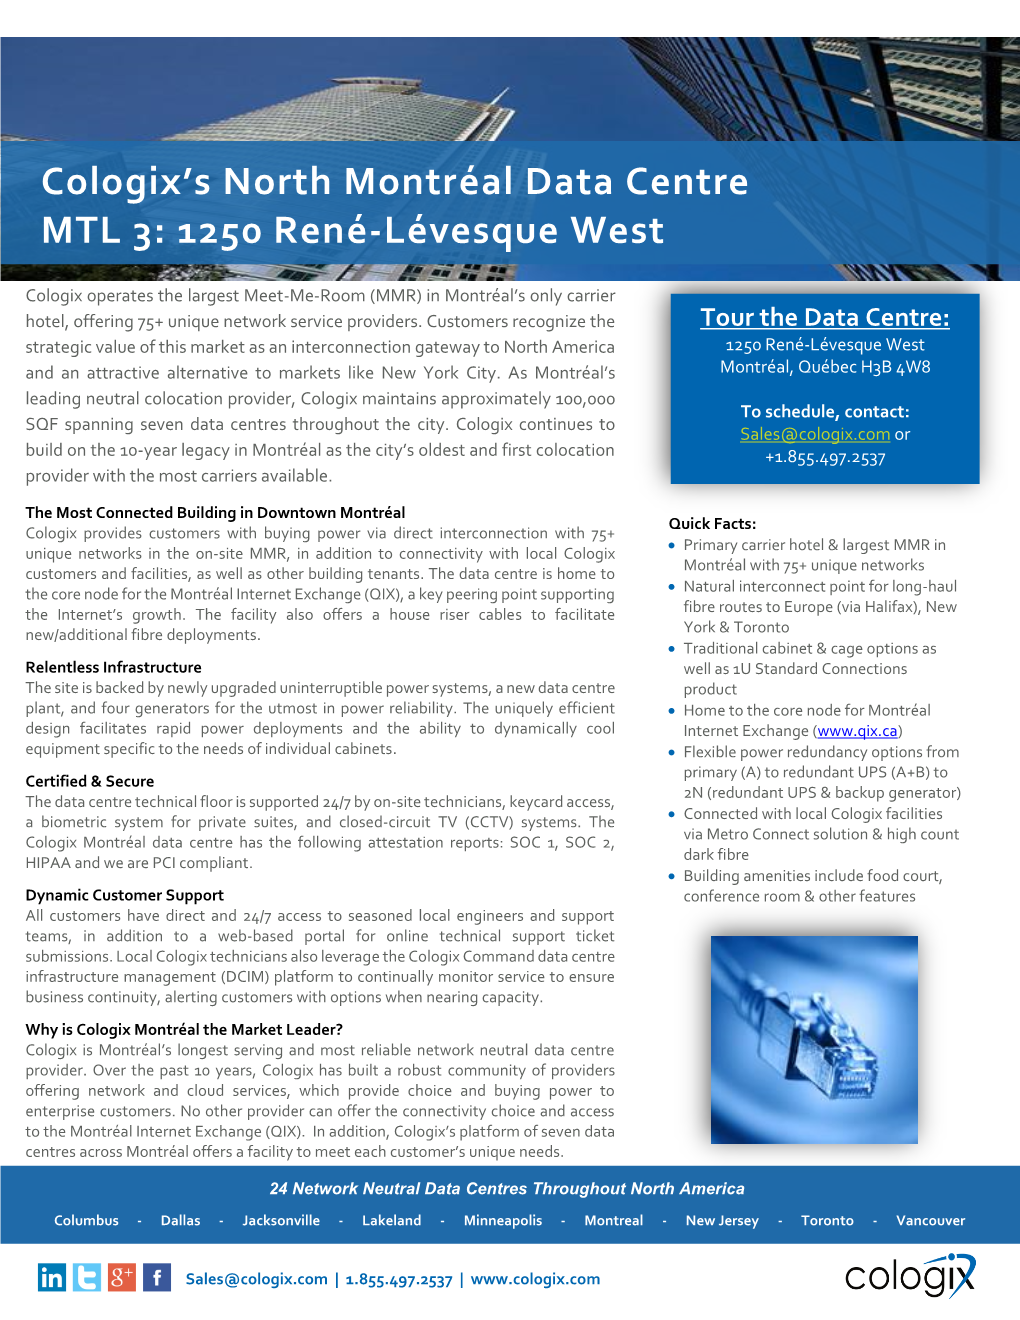 Cologix Montreal 3 Data Center